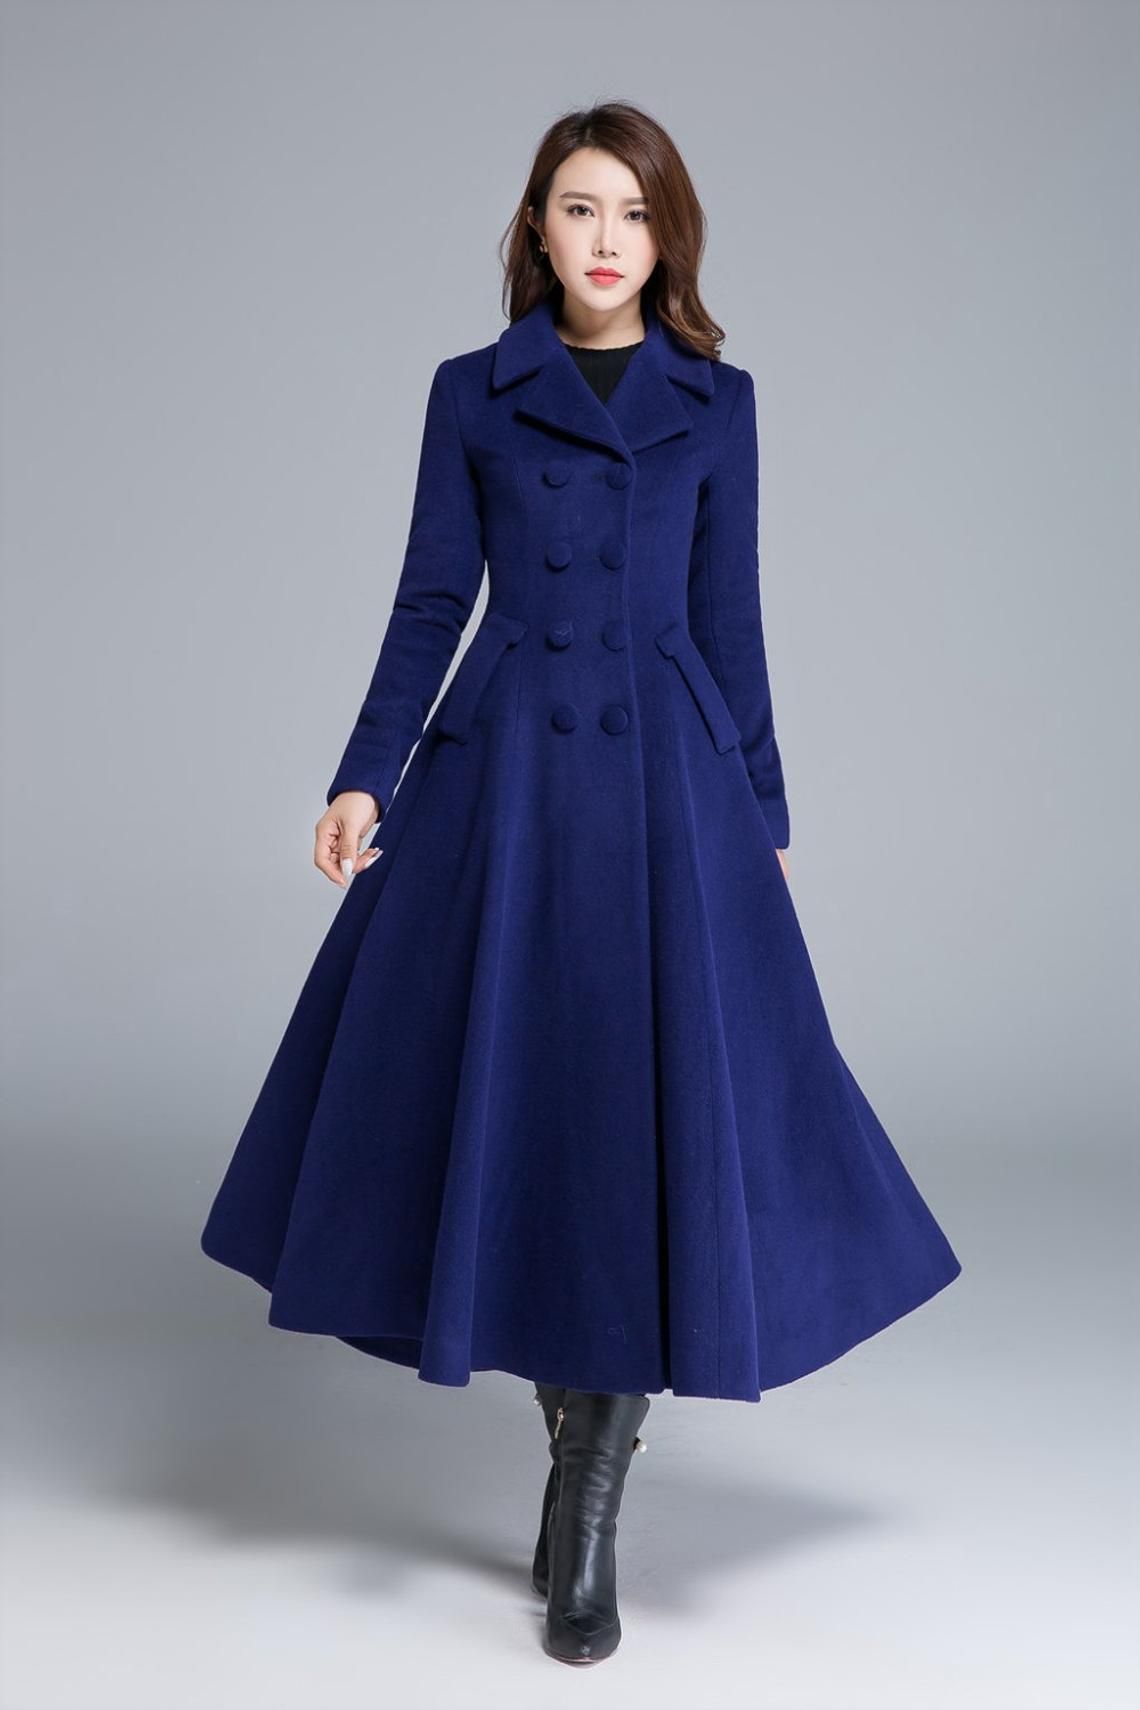 Winter coat vintage, wool coat, womens coat, blue wool coat, long wool coat, fit and flare coat, double breasted coat, xiaolizi 1685# -   19 dress Blue winter ideas